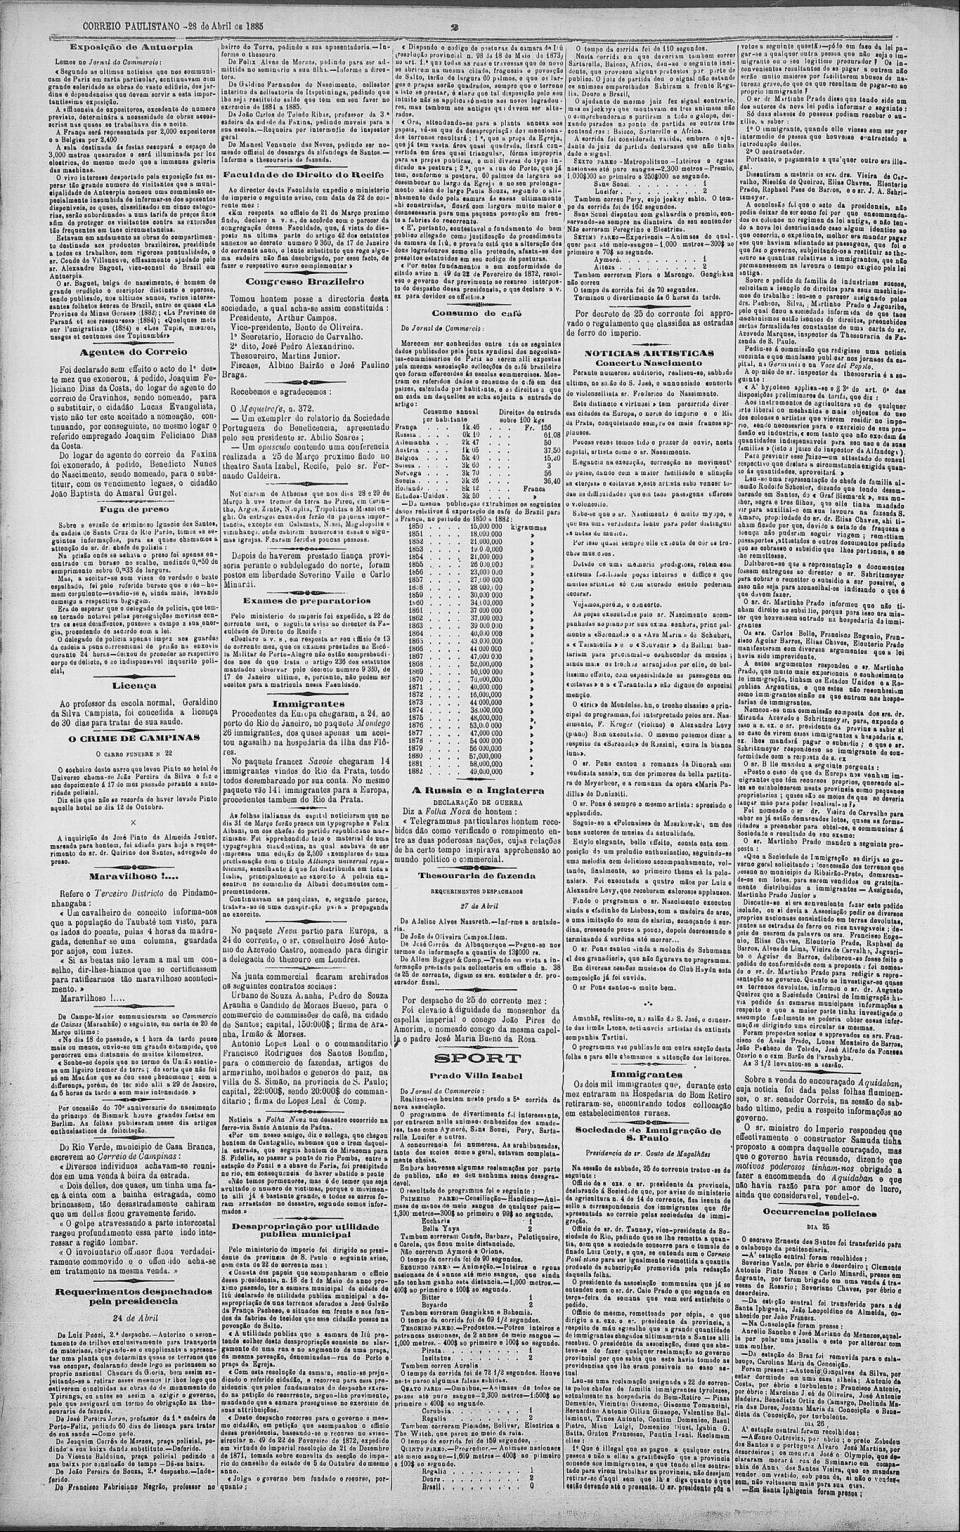 vapor-maria-art-28-abril-1885-reclamacao-antonio-tinos-pagina-correio_paulistano